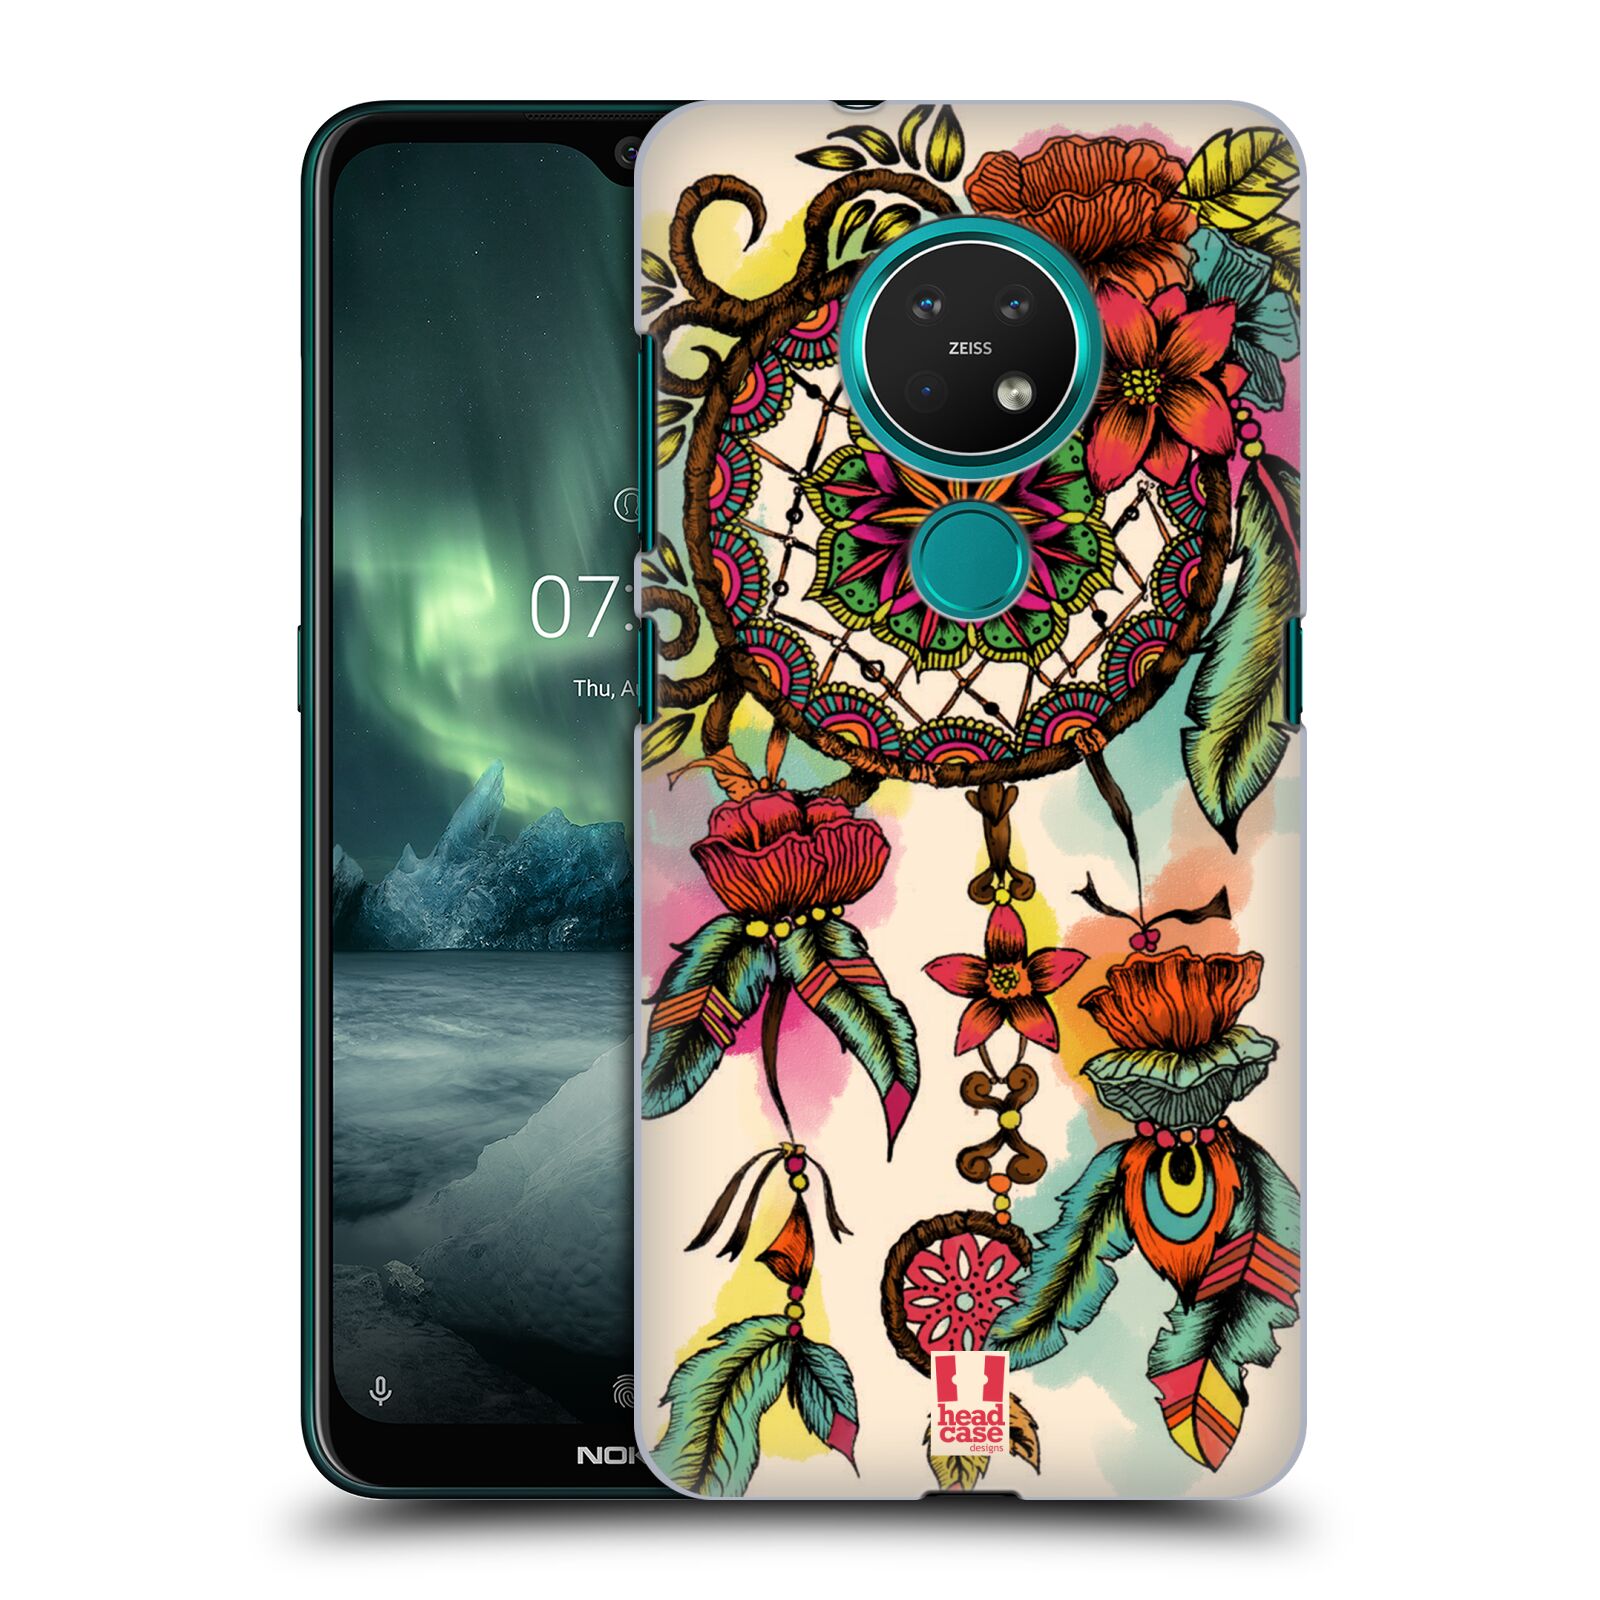 Pouzdro na mobil NOKIA 7.2 - HEAD CASE - vzor Květy lapač snů FLORID